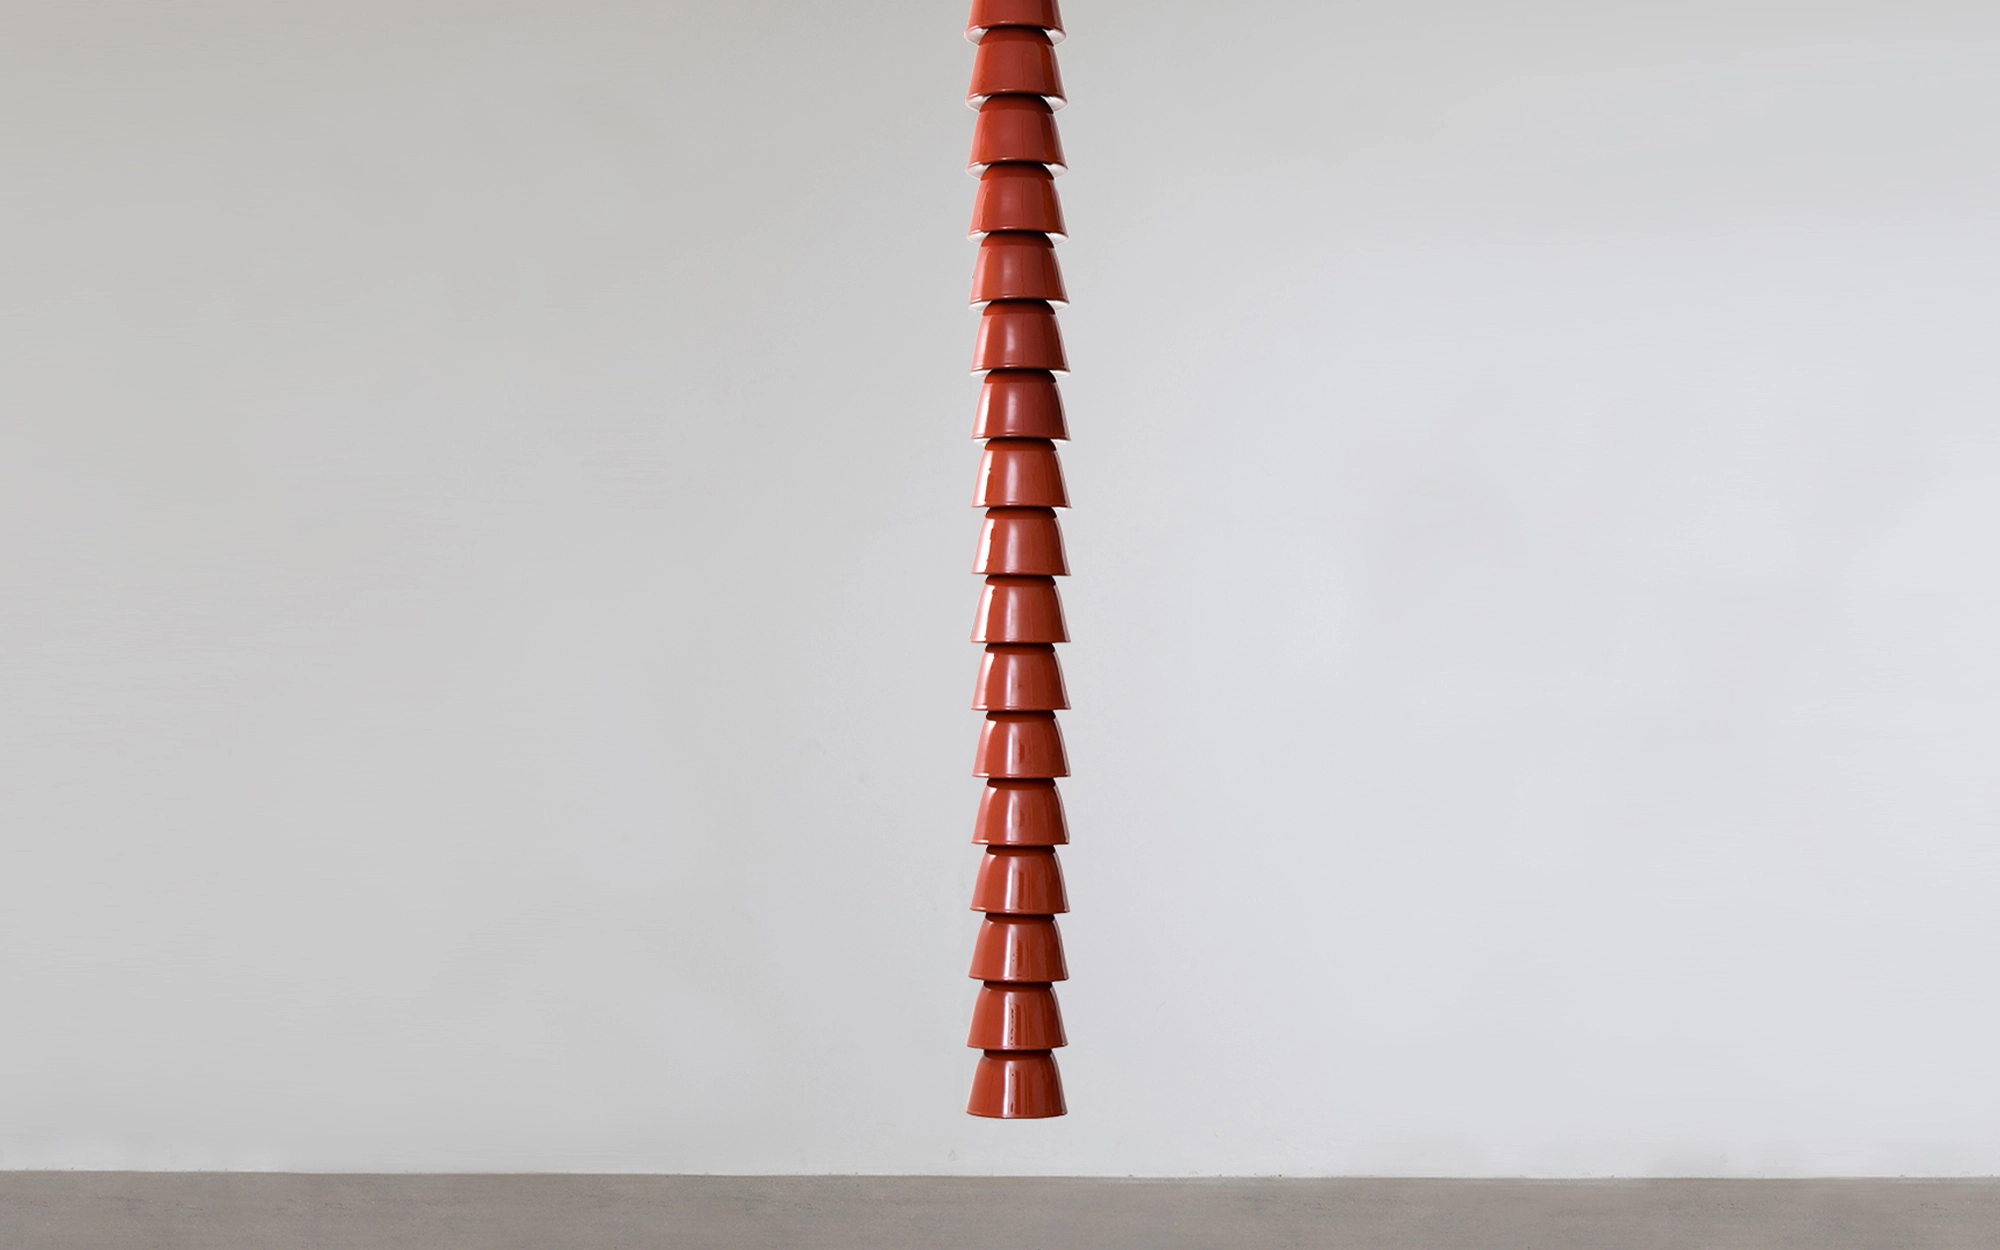 Chaînes Ceramic Single - Ronan and Erwan Bouroullec - kamel mennour x Galerie kreo @en Provence.